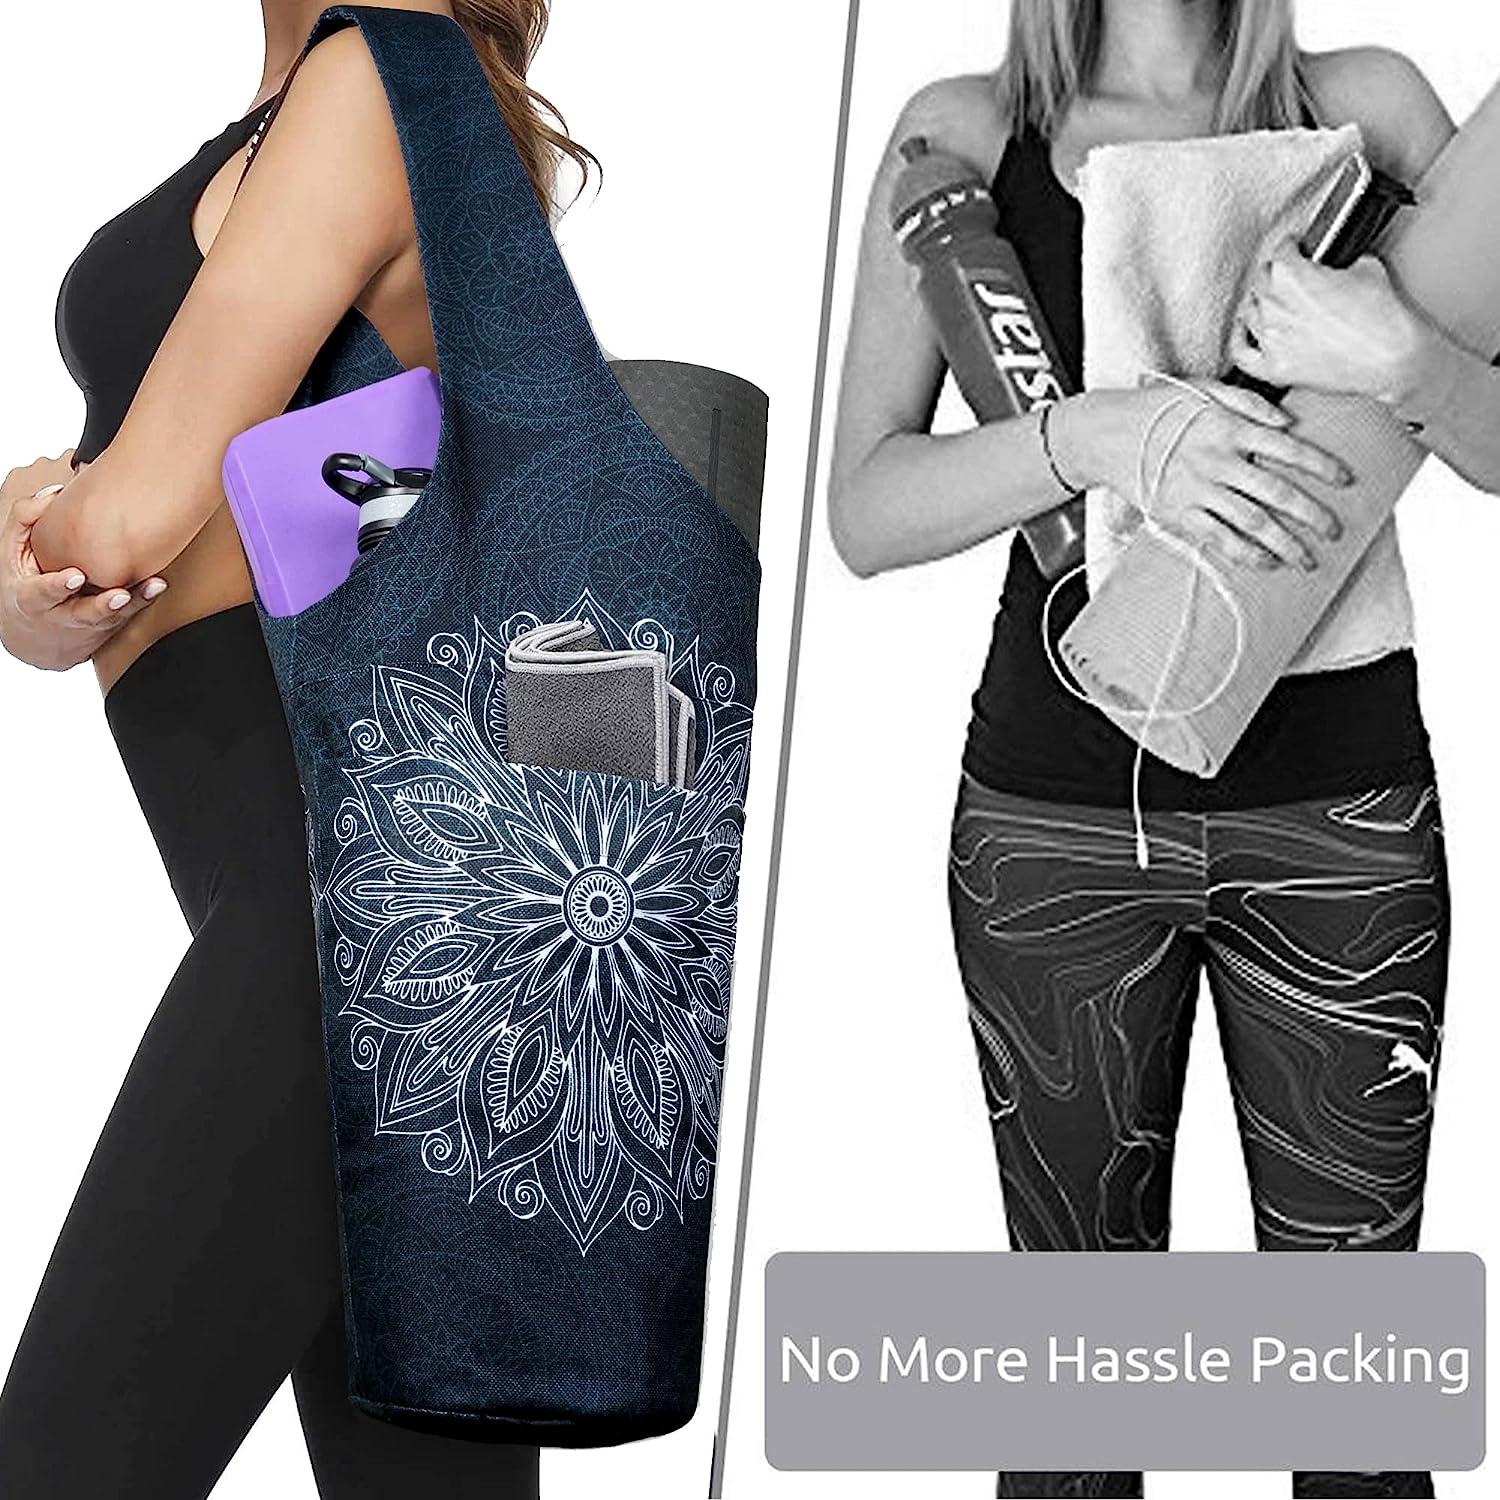 Fashion Printed Yoga Mat Bag with Large Side Pocket & Zipper Pocket Long Tote  Yoga Bag Fit Most Size Mats - Holds More Yoga Accessories Mandala Black  37x15.5